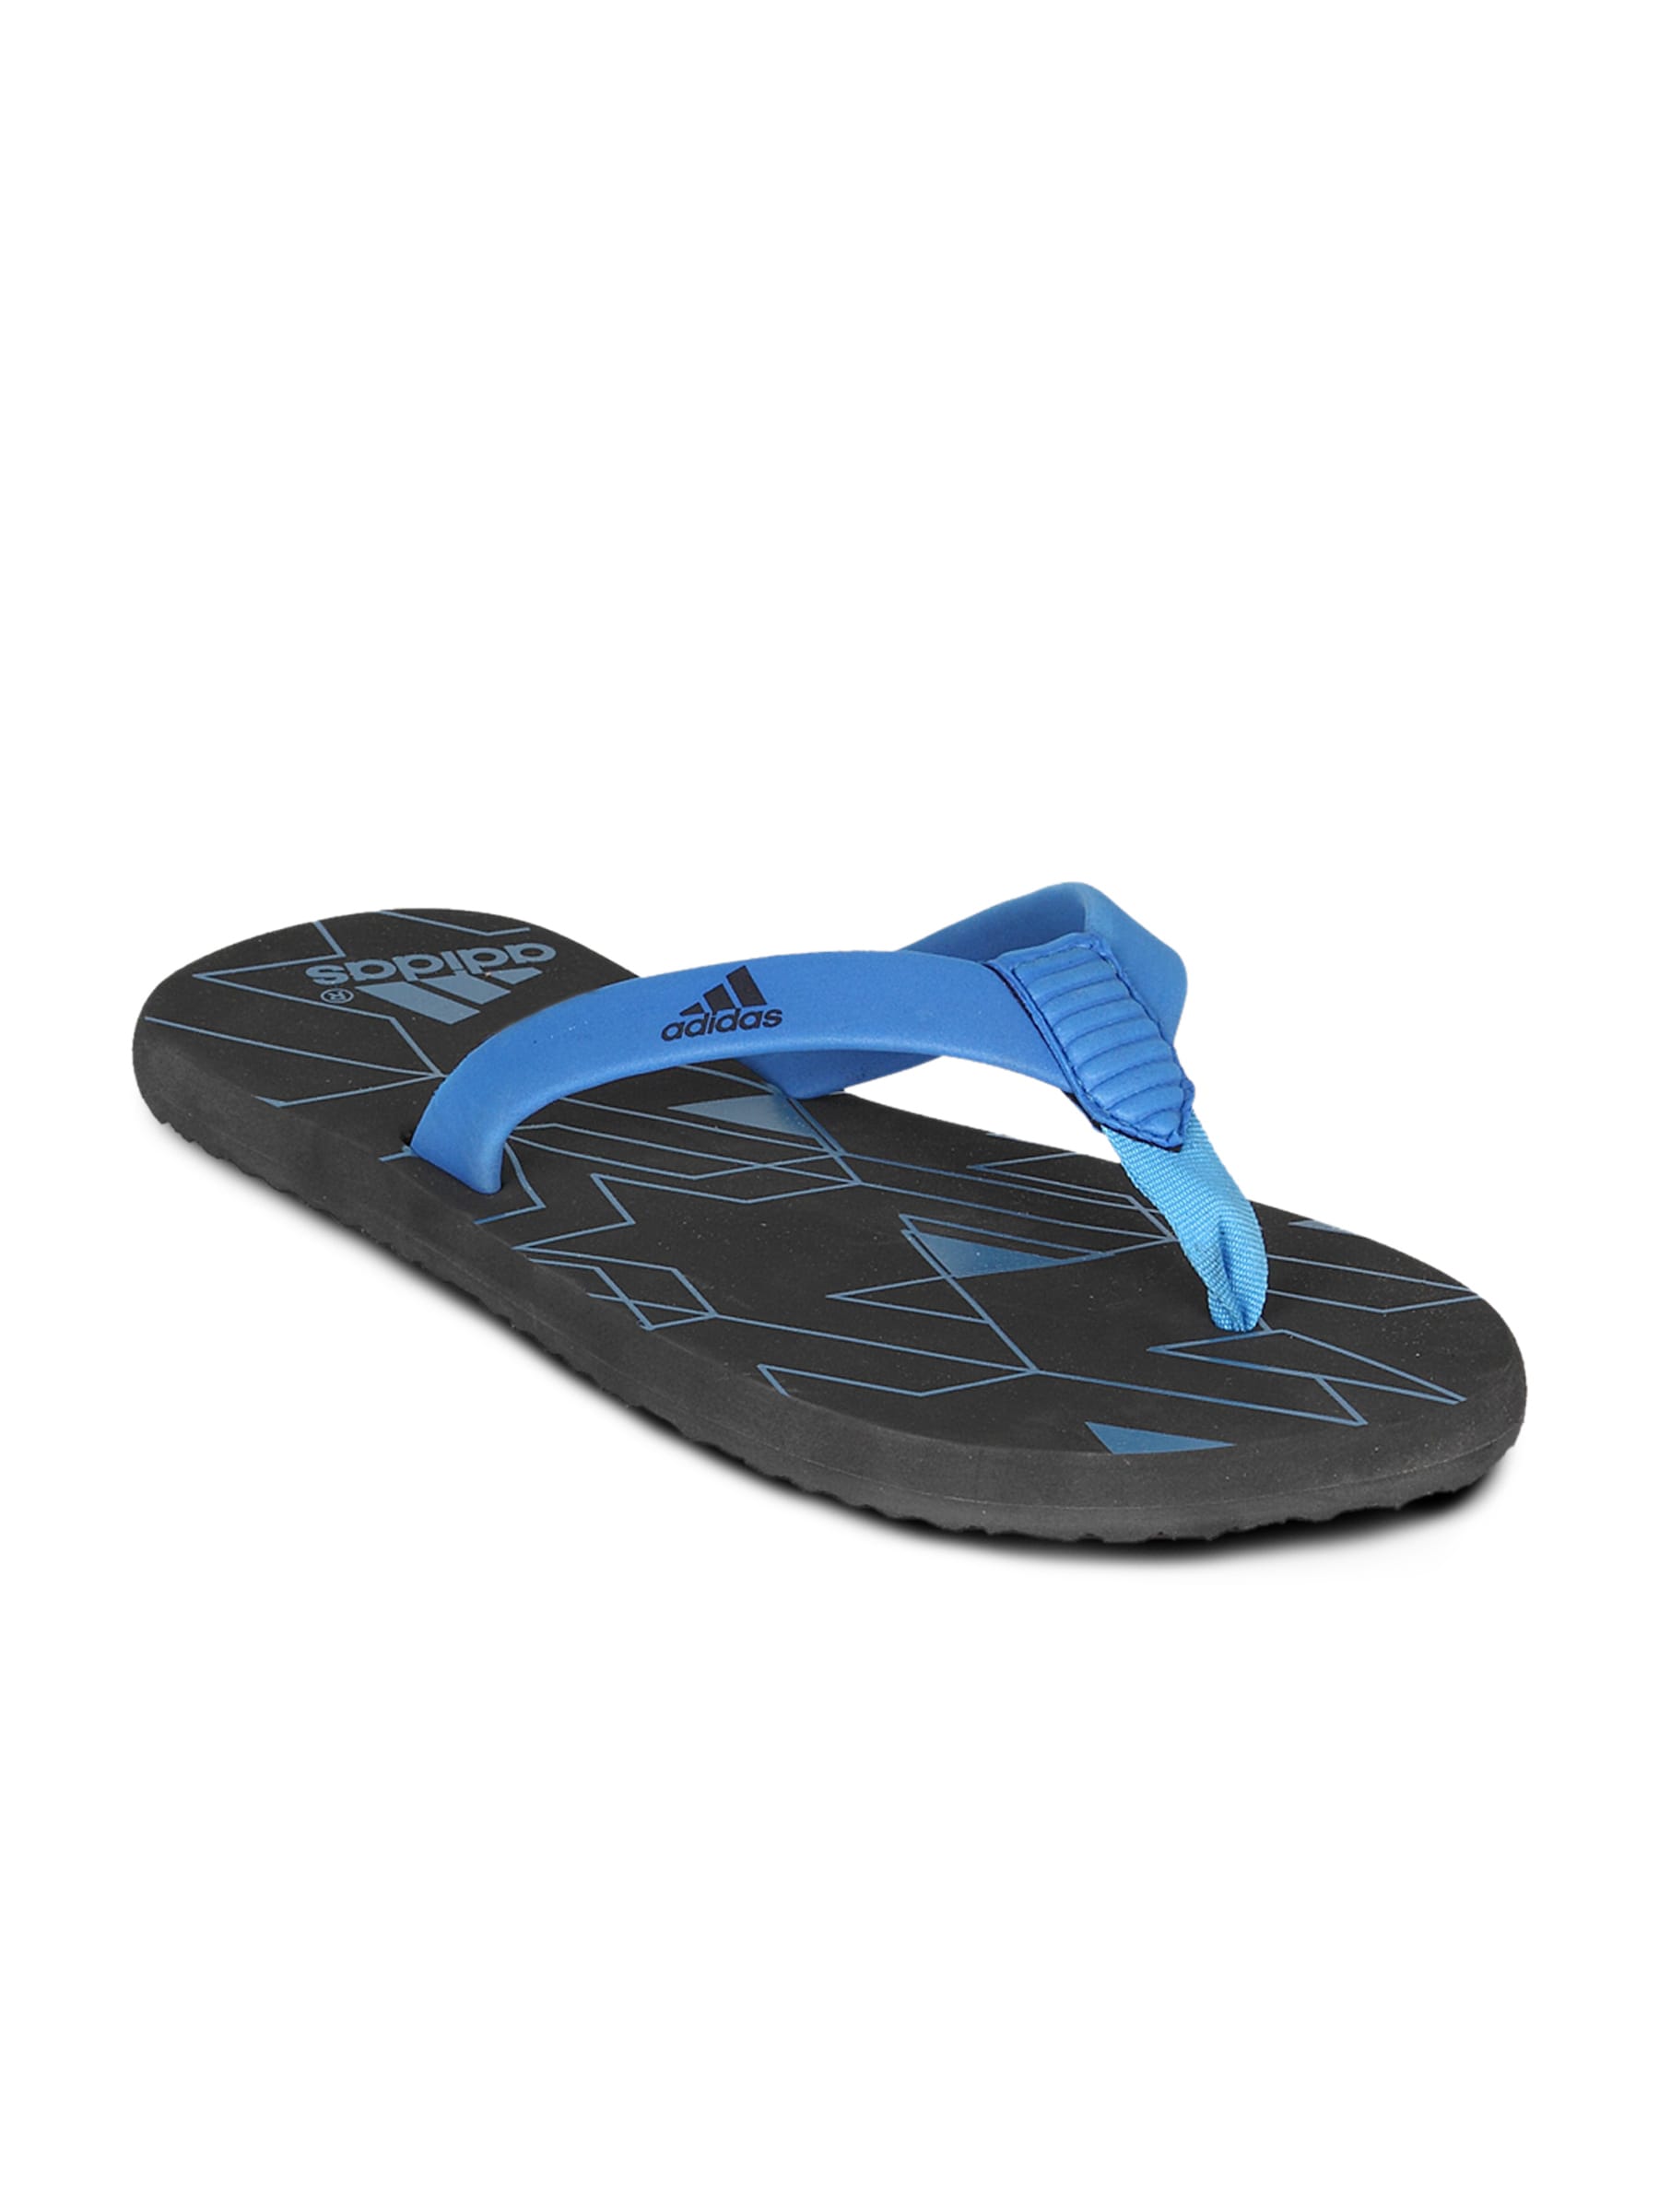 ADIDAS Men's Adi Liner Black Blue Flip Flop